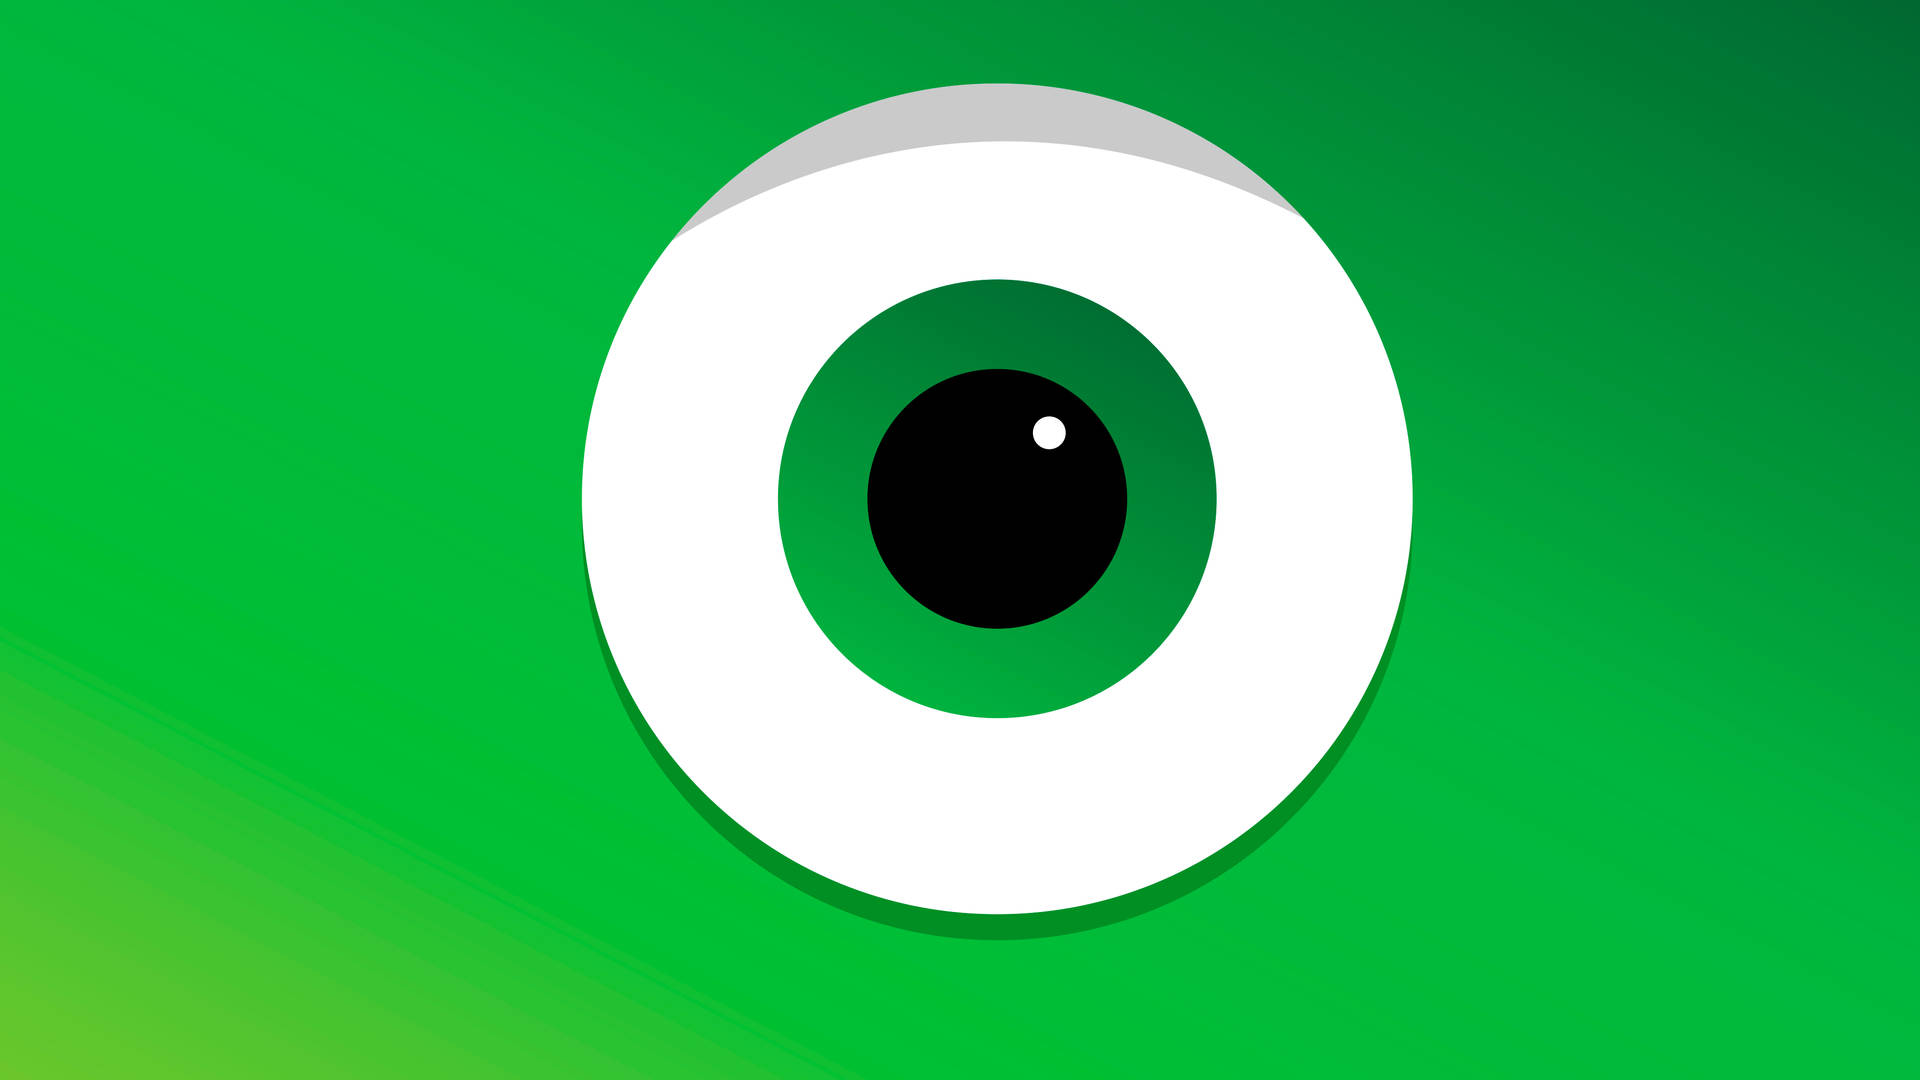 Mike Wazowski Iconic Green Eyes Wallpaper